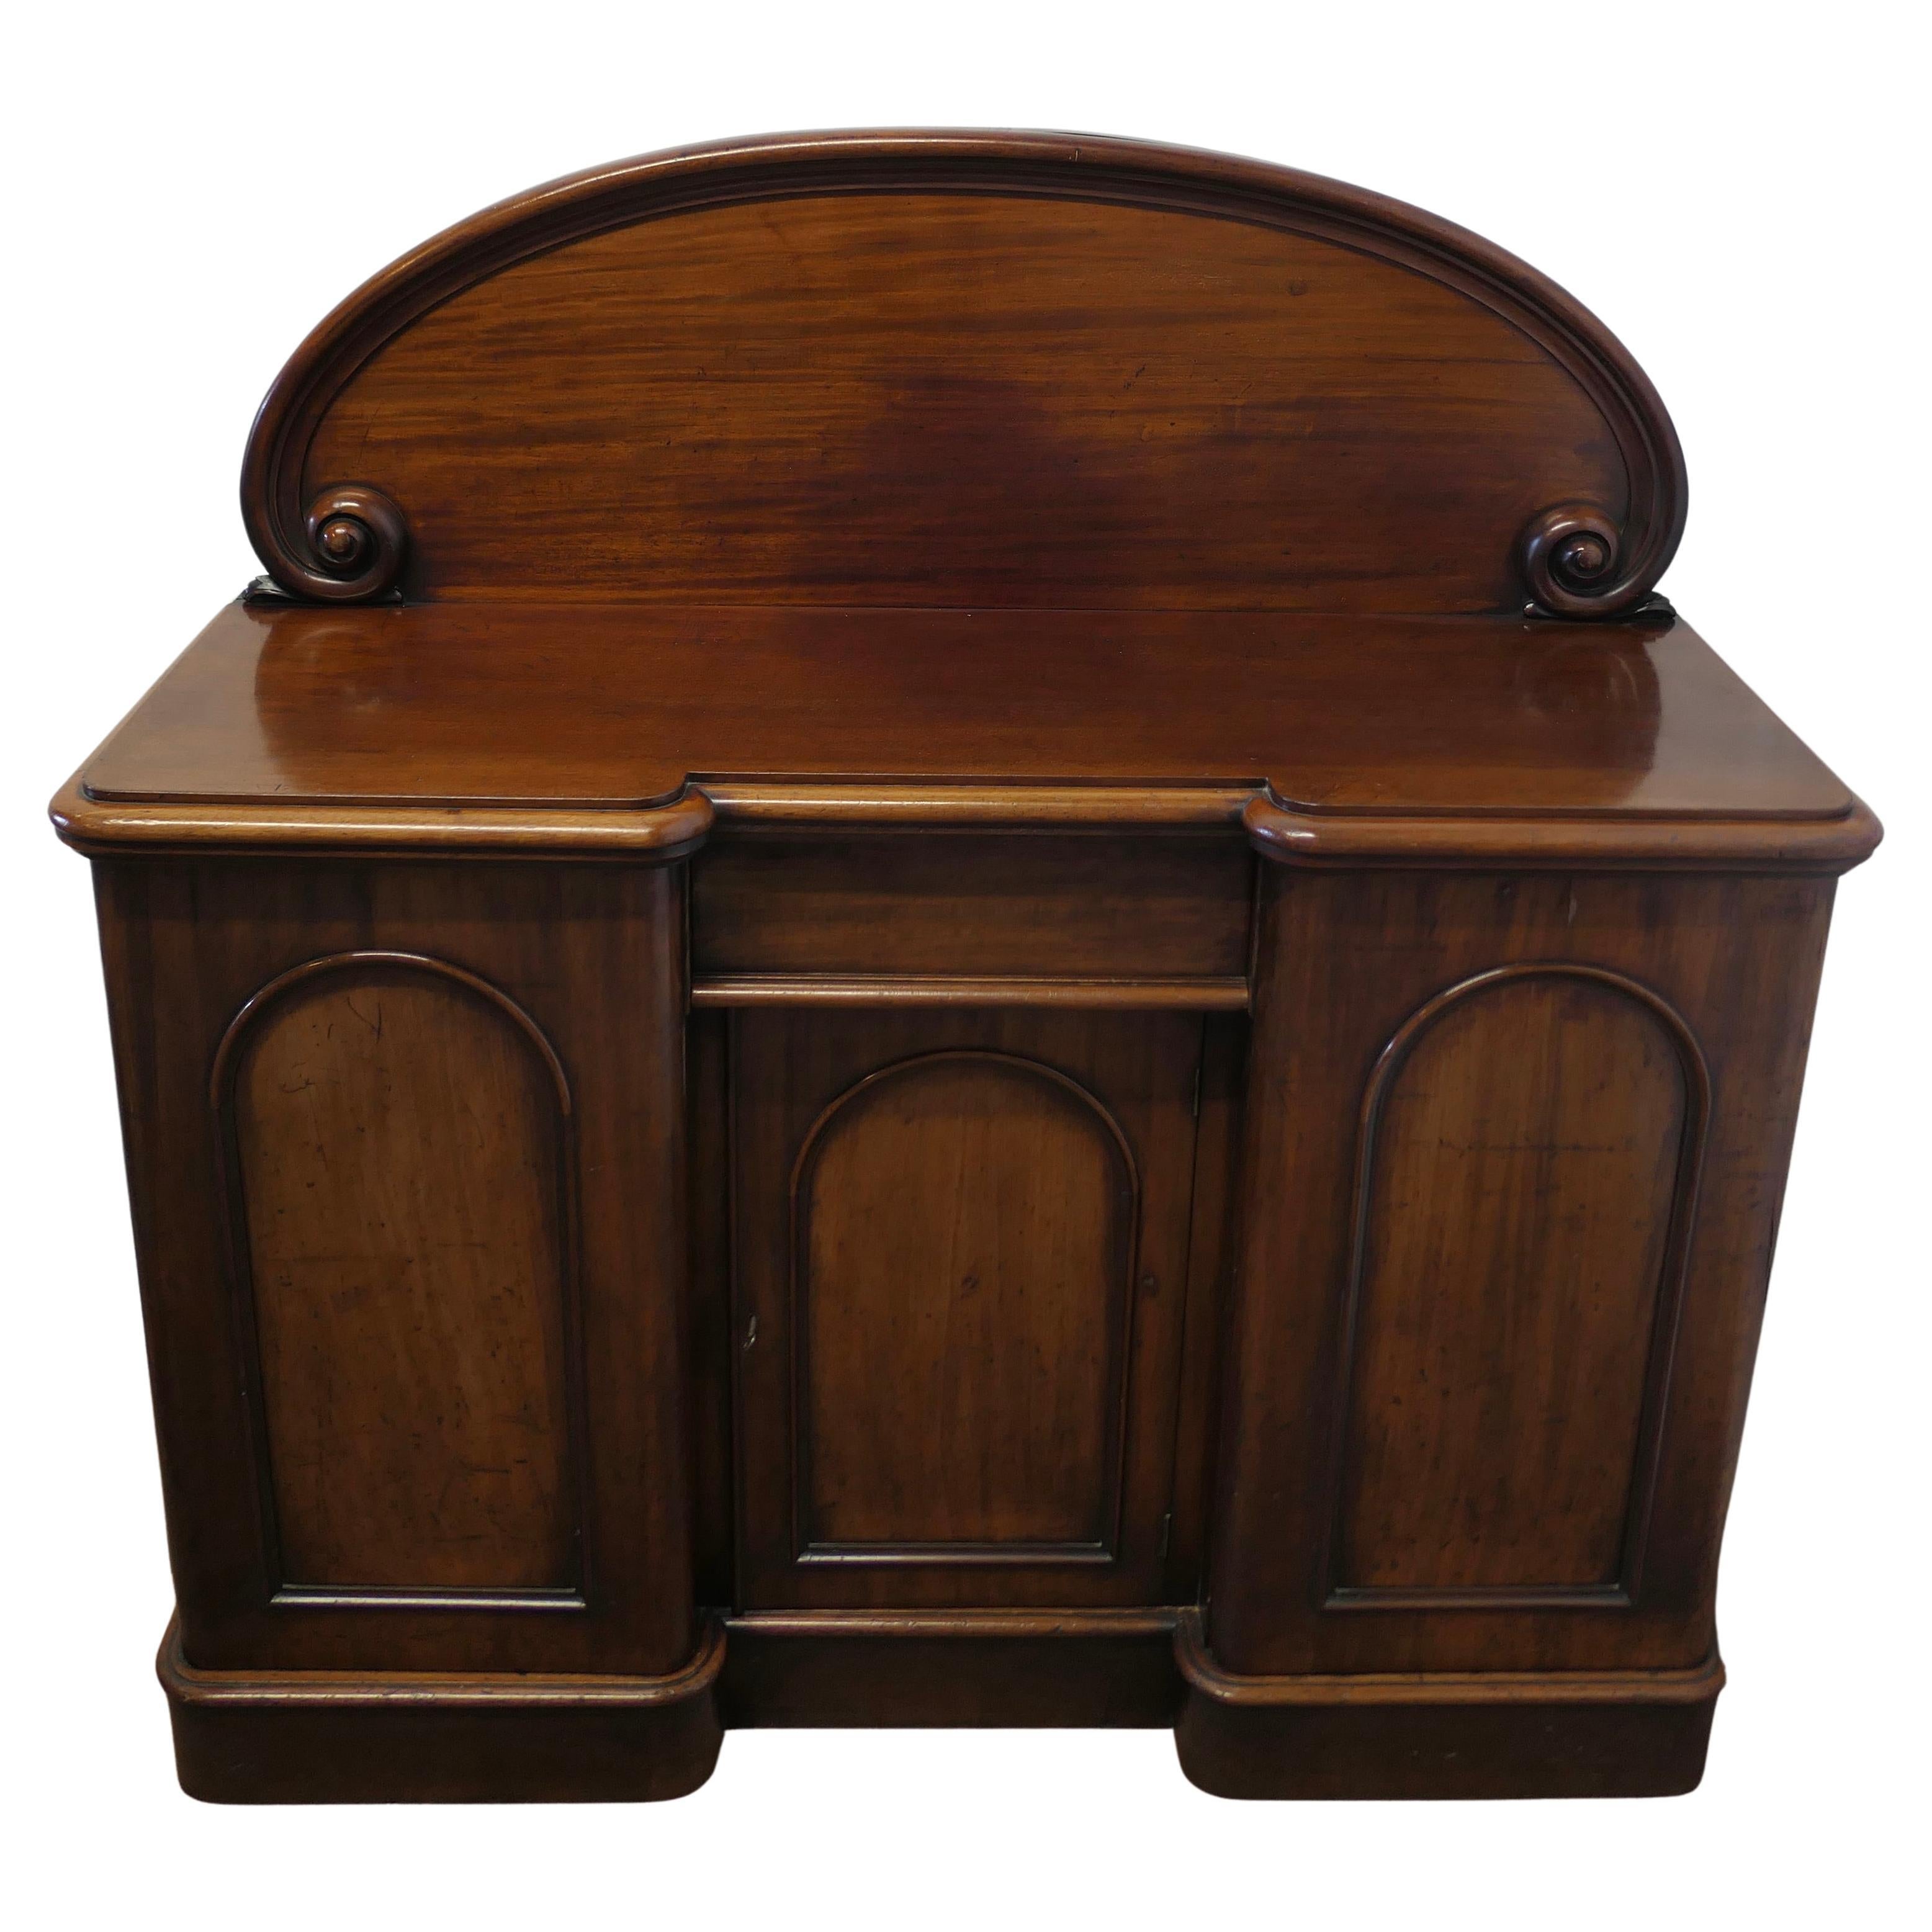 A Medium Size Victorian Sideboard or Chiffonier   